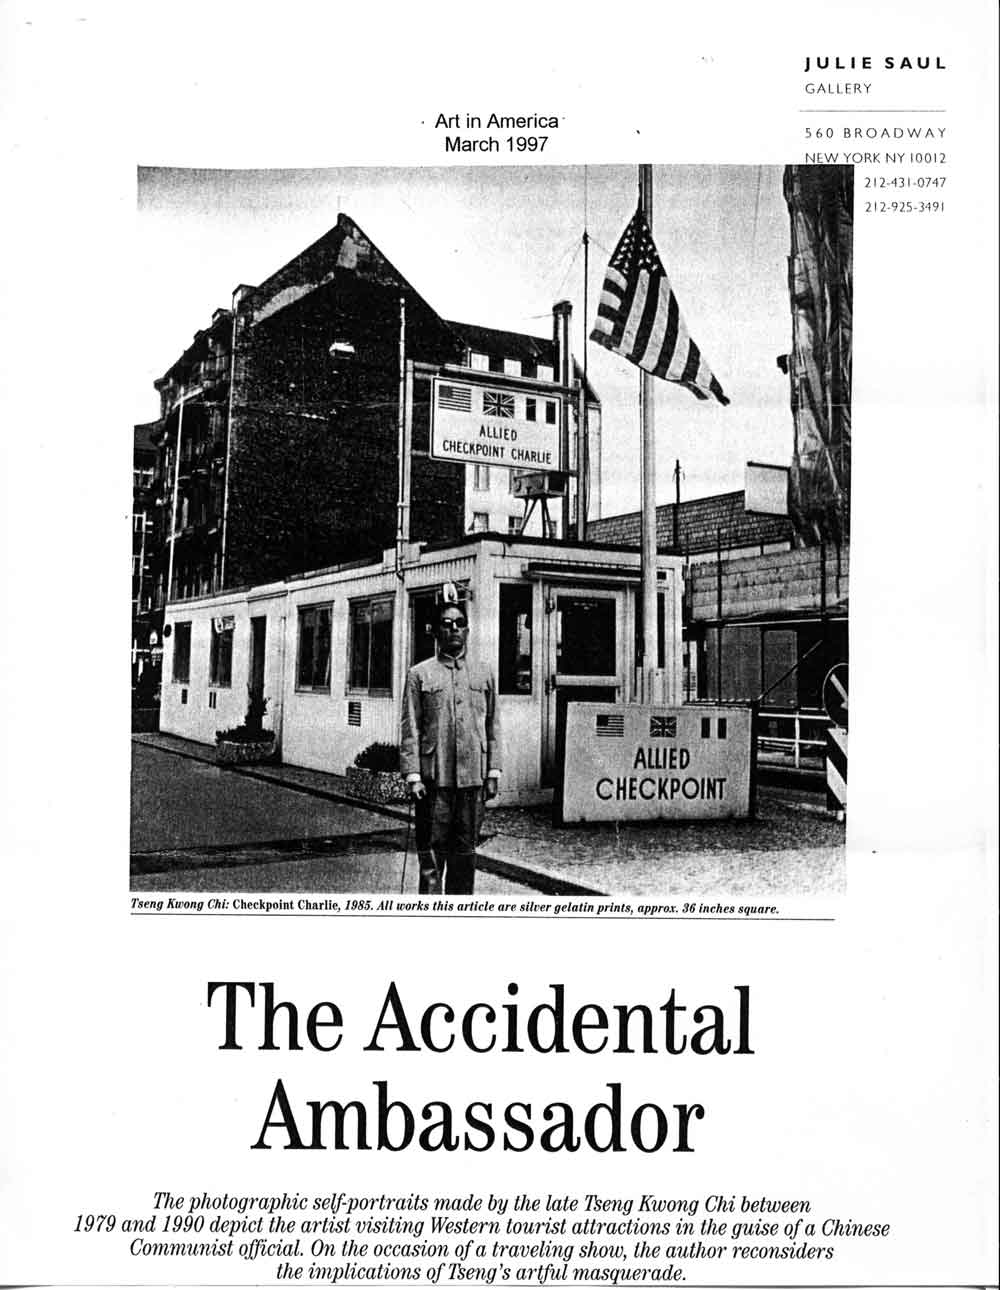 The Accidental Ambassador